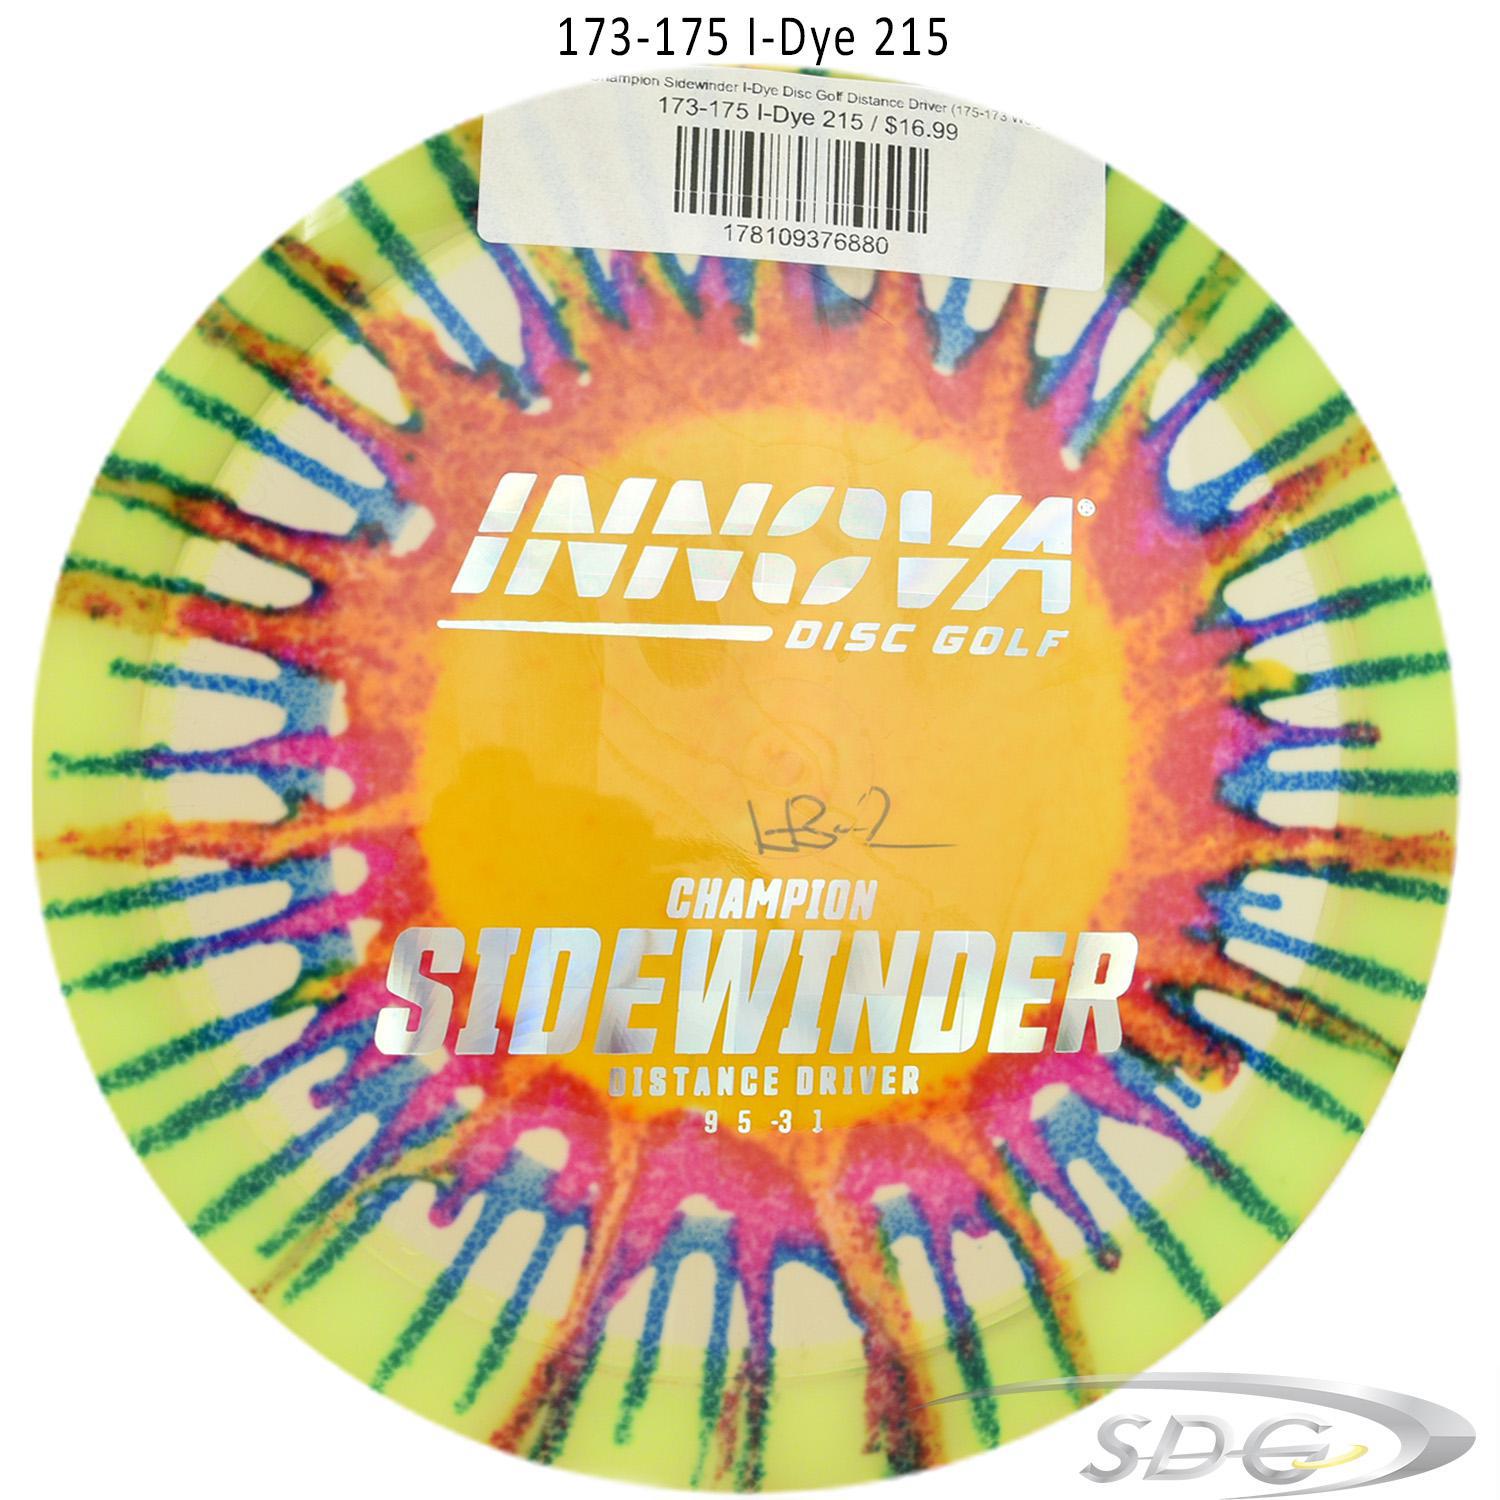 innova-champion-sidewinder-i-dye-disc-golf-distance-driver 173-175 I-Dye 215 